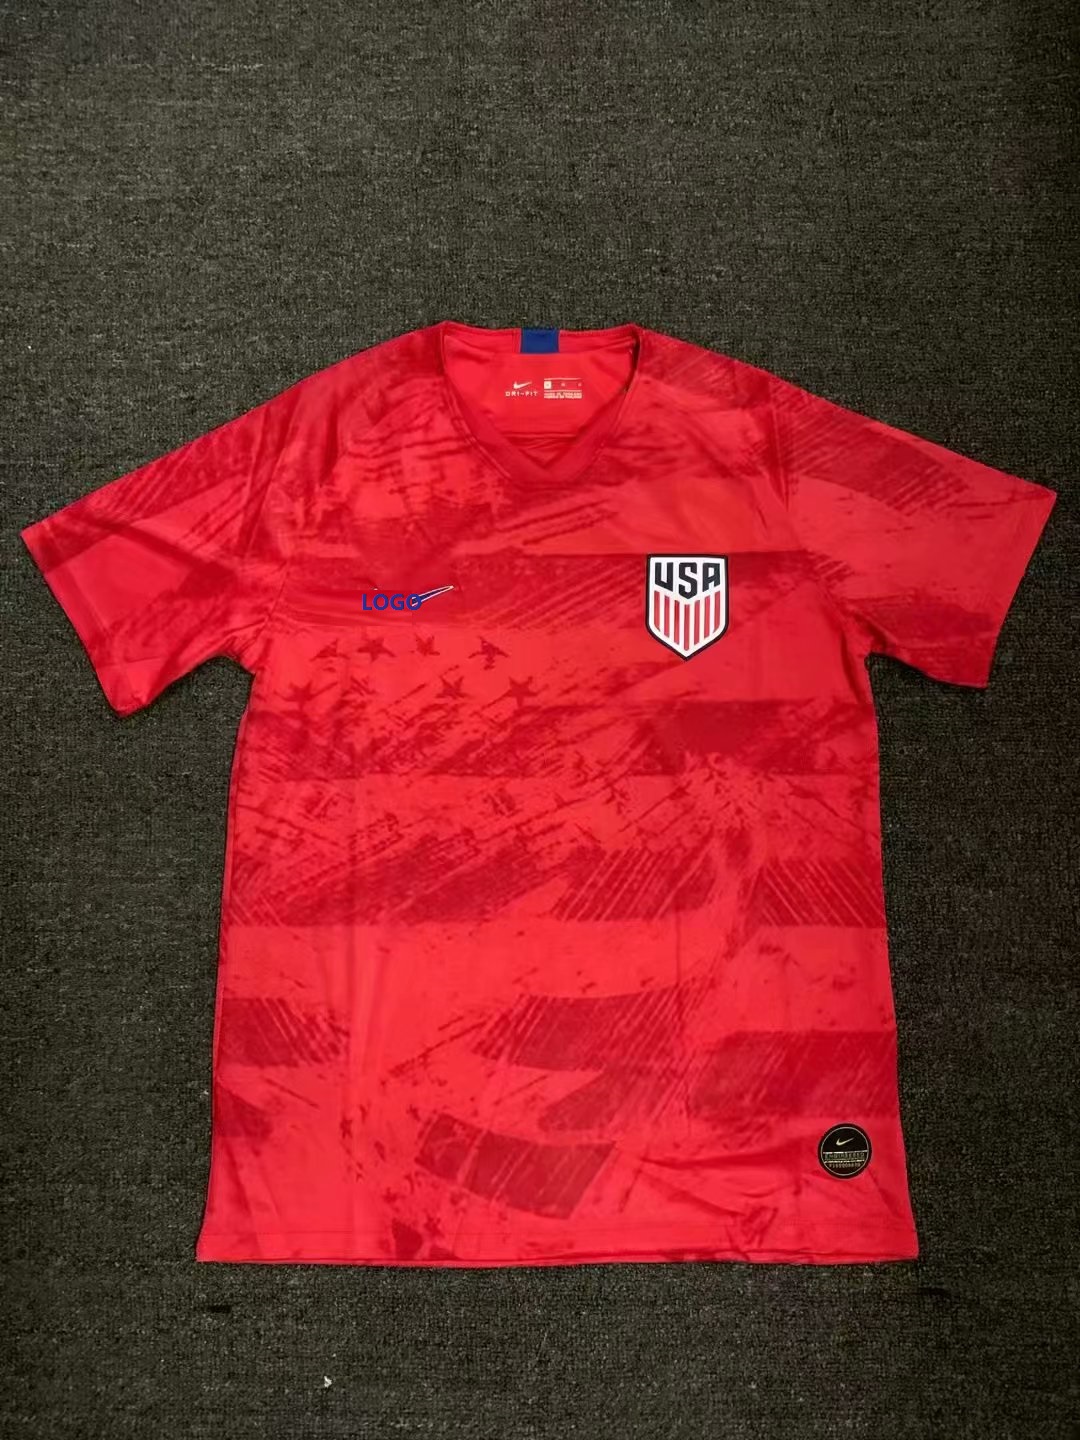 2019 usa soccer jersey